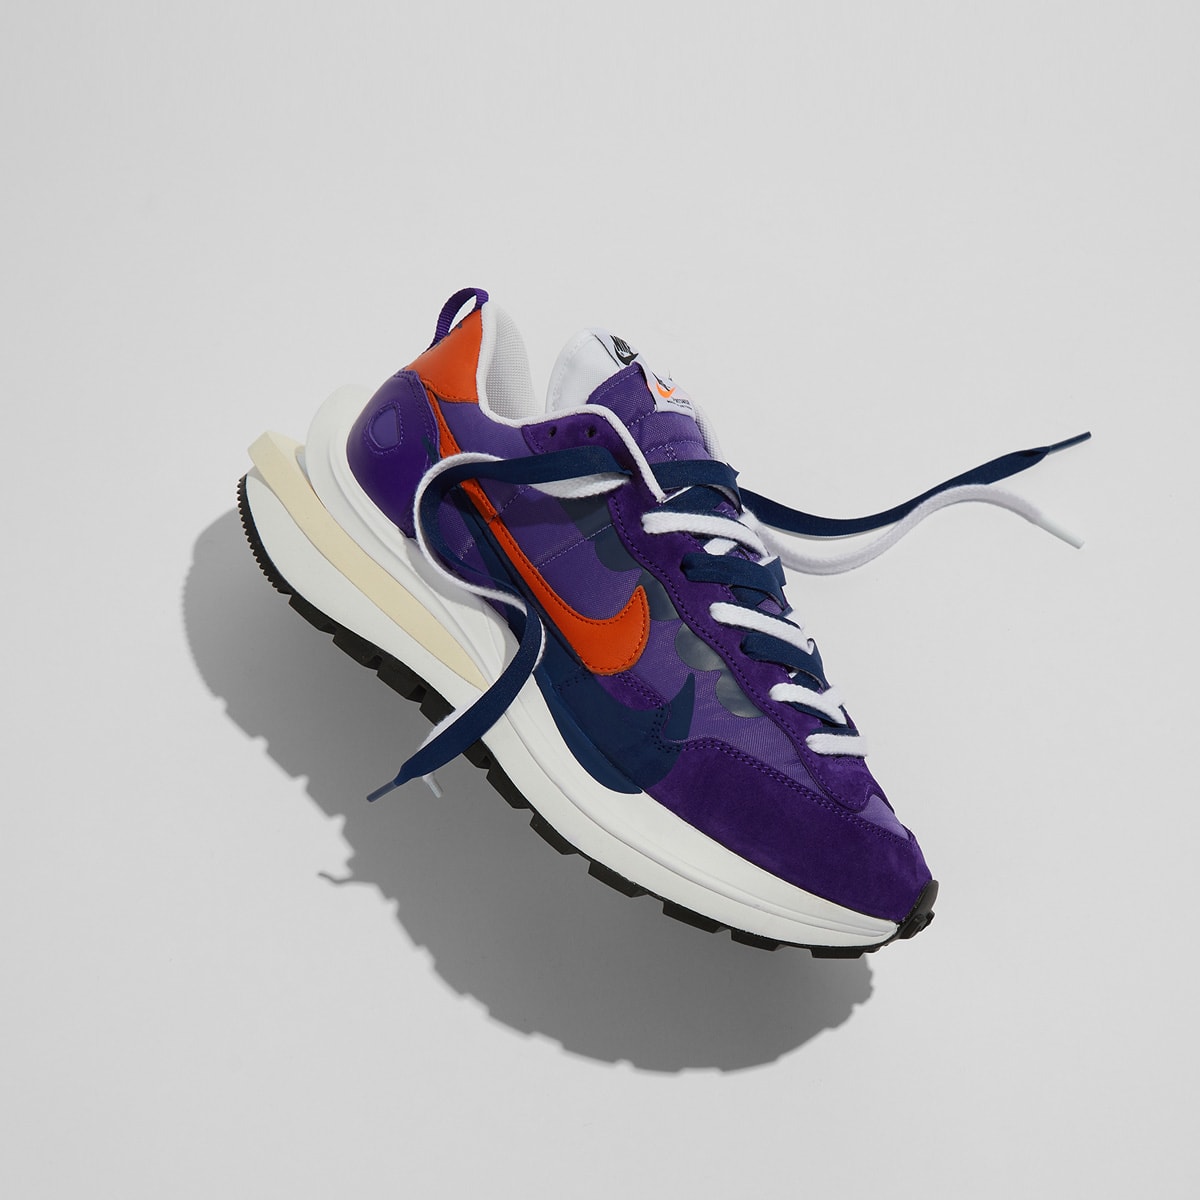 Nike x Sacai Vaporwaffle (Dark Iris & Campfire Orange) | END. Launches